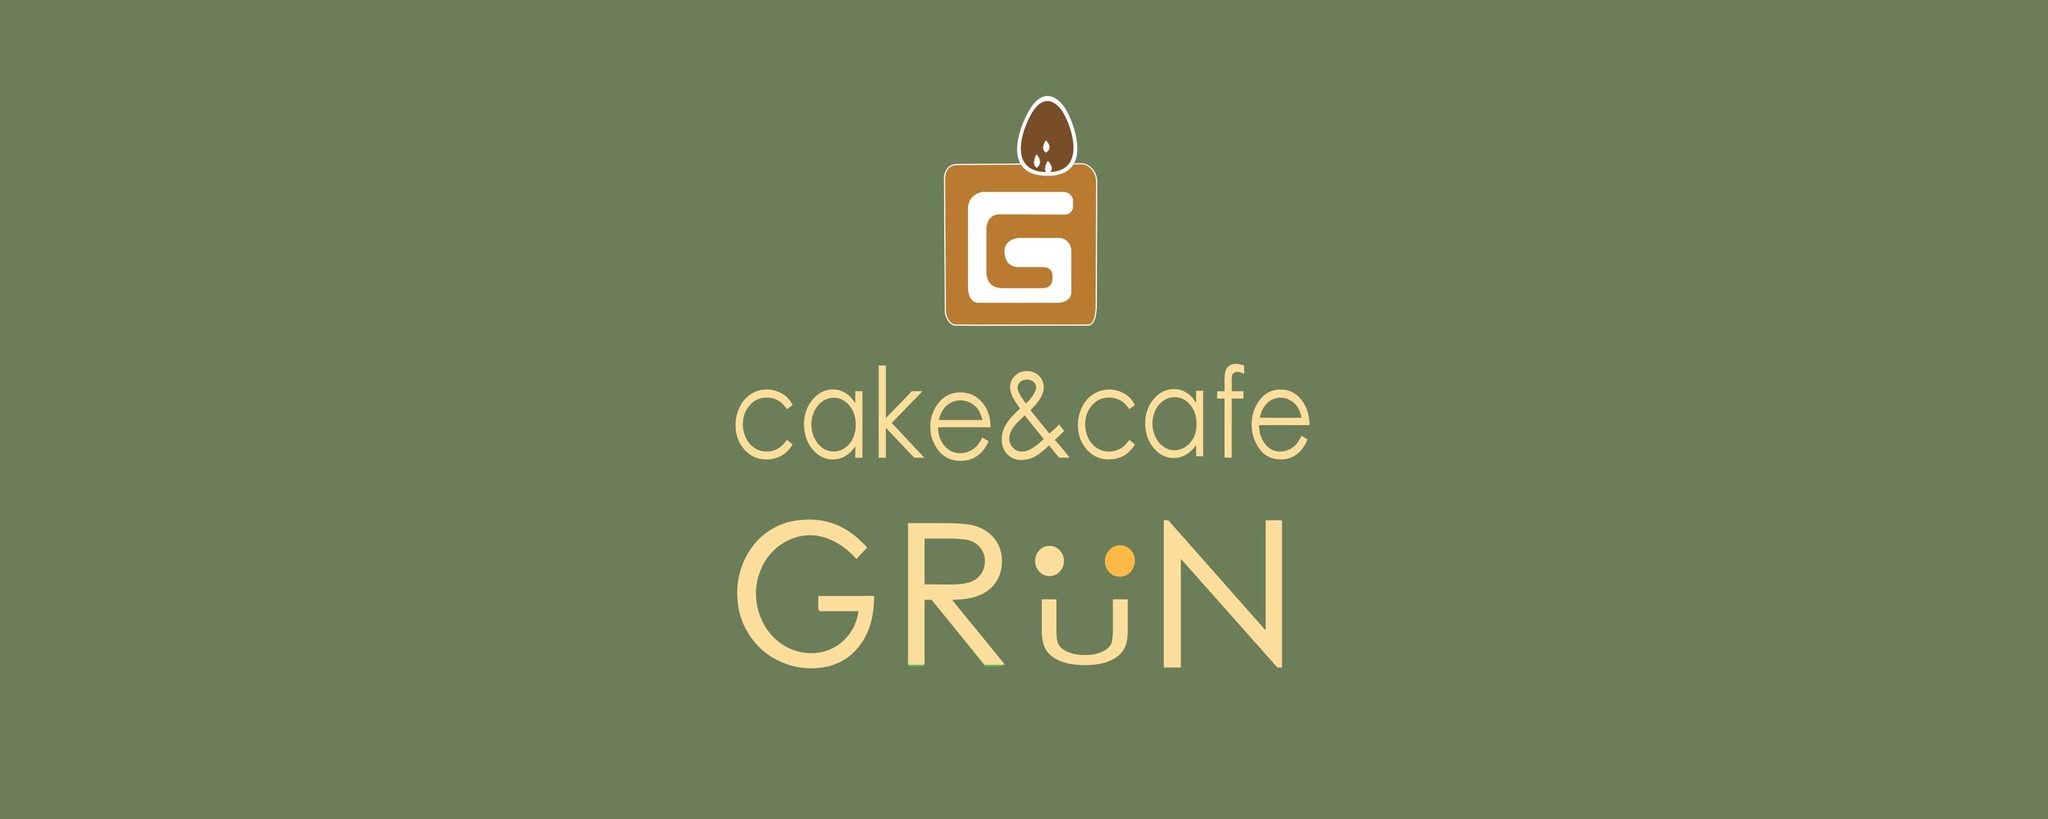 cake&cafe grun